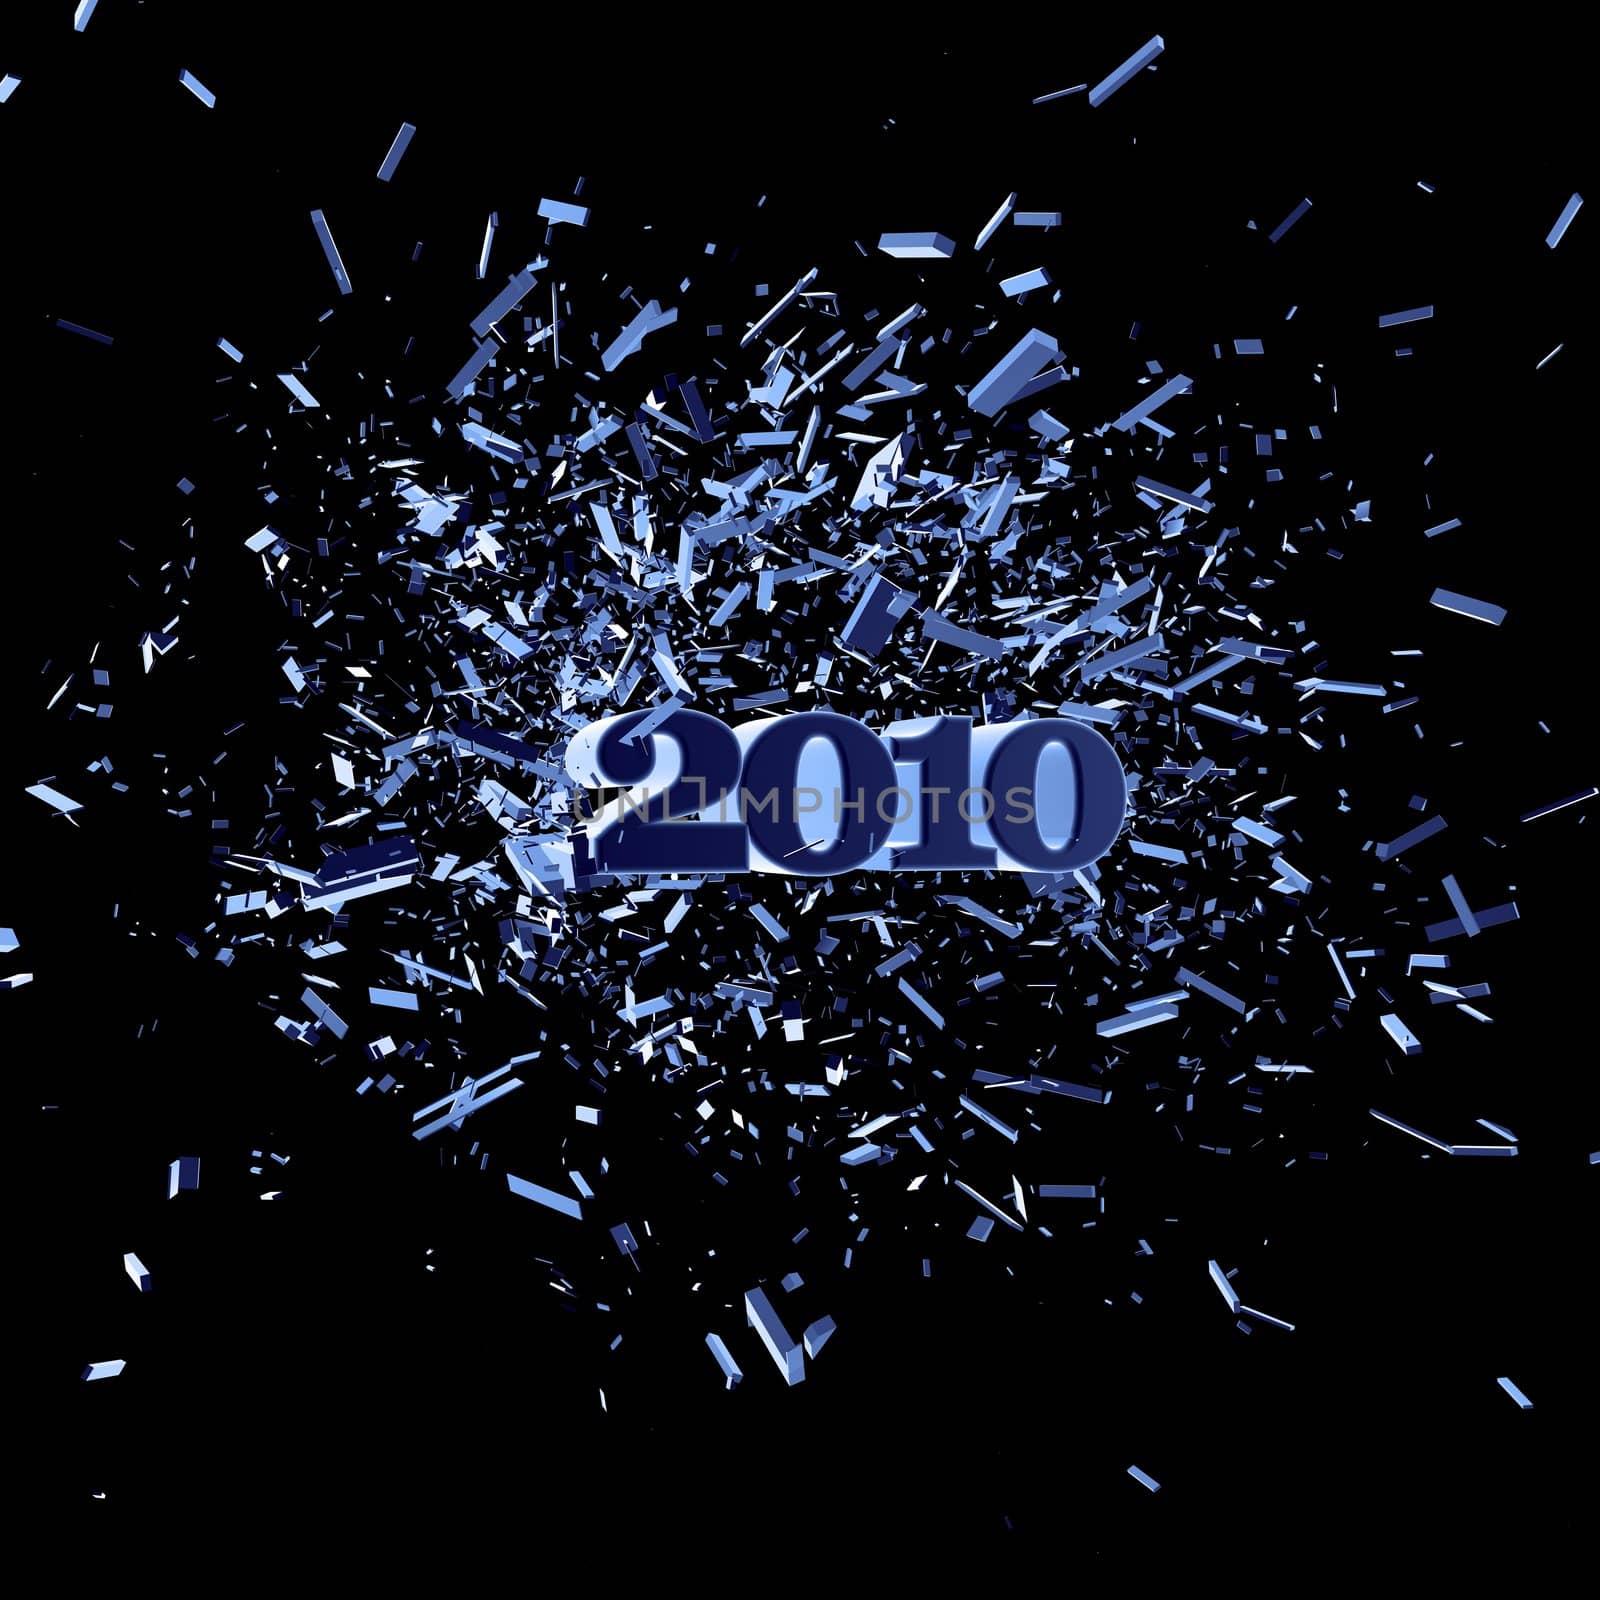 exploding year 2010 on black background - 3d illustration